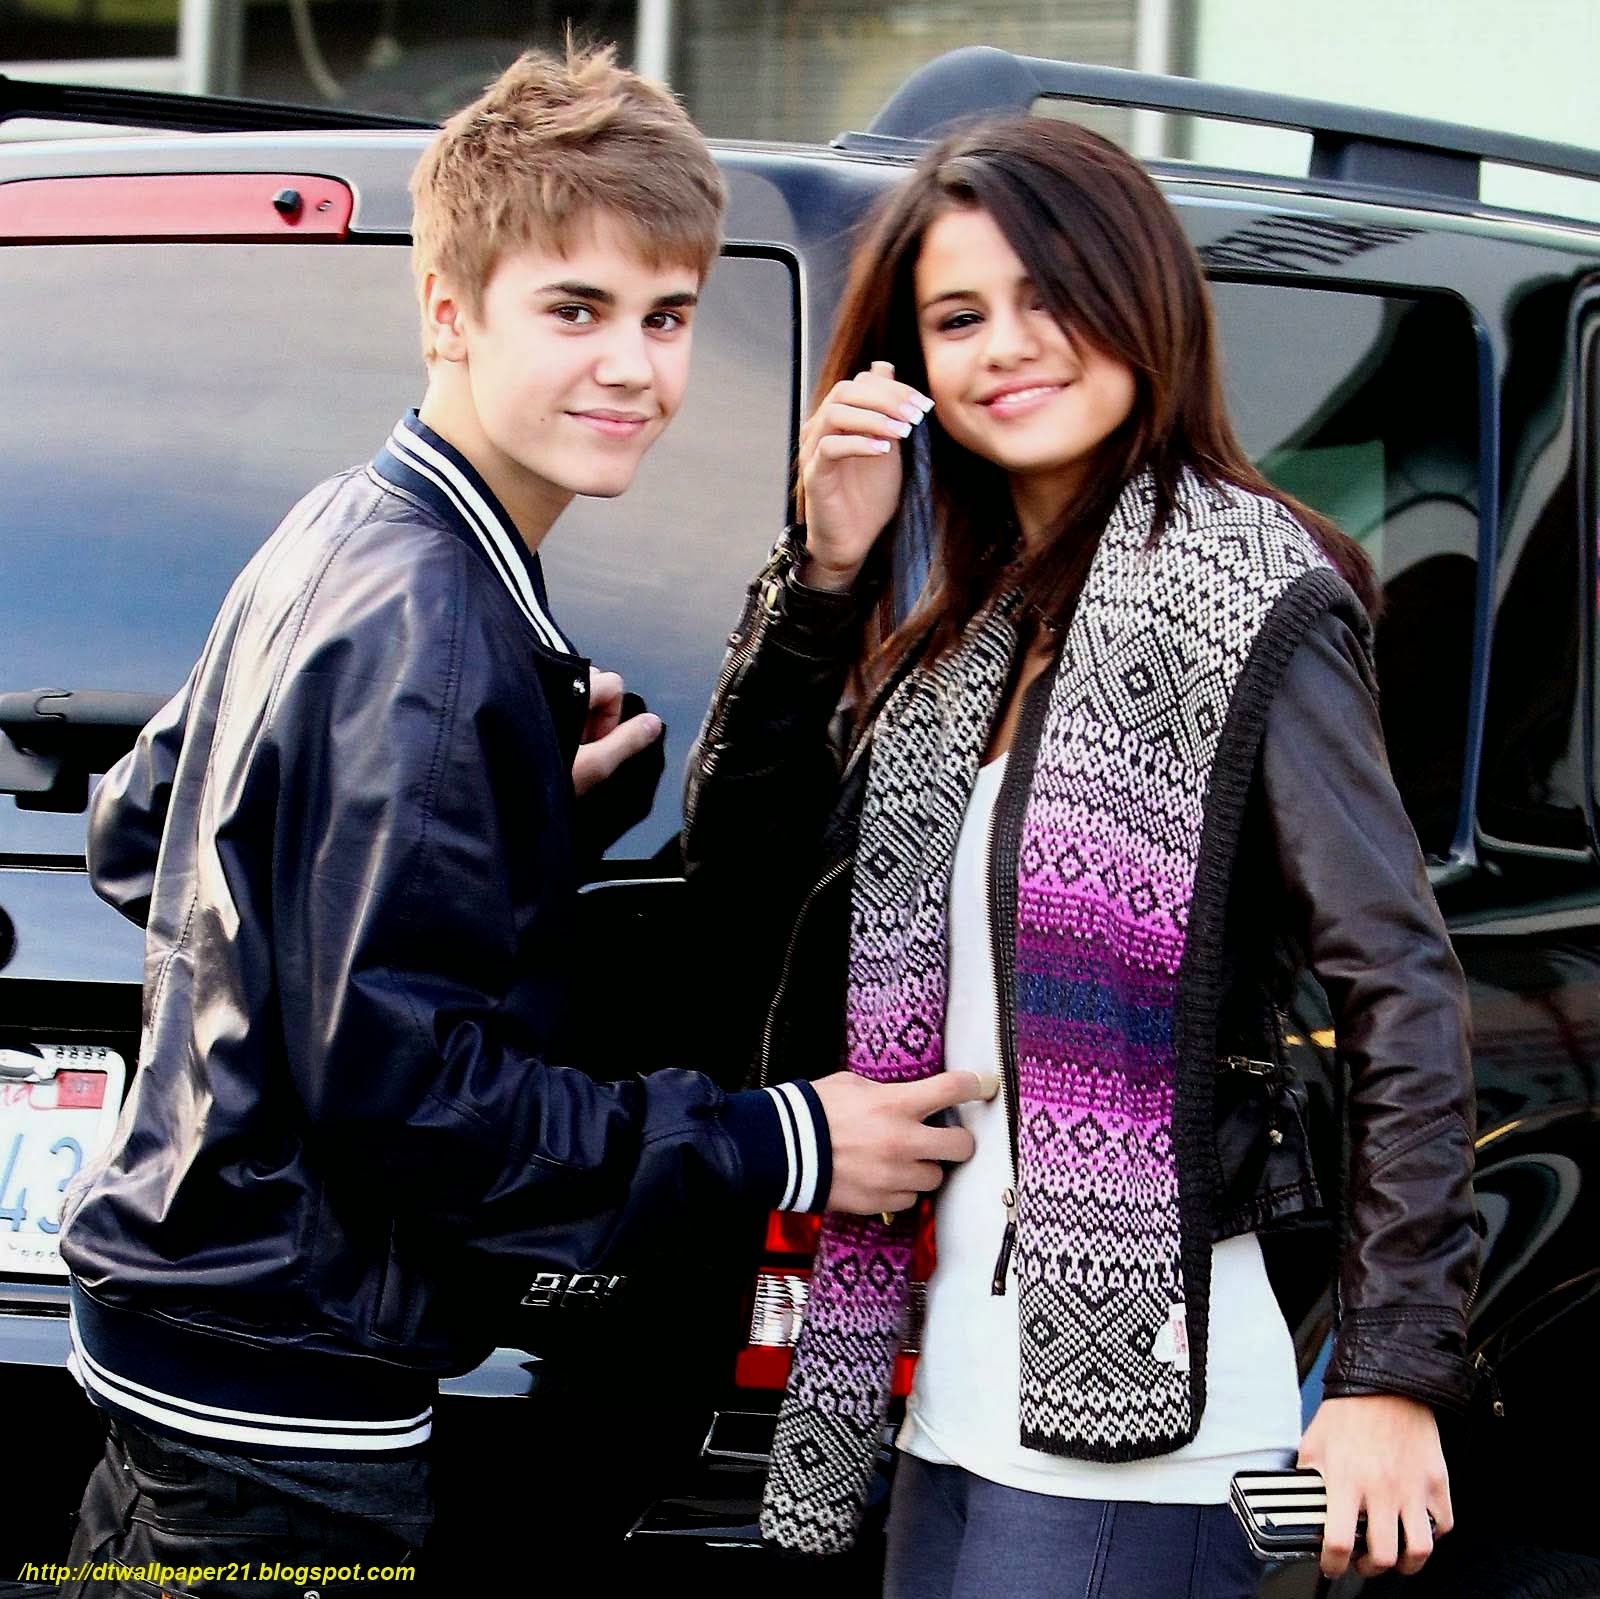 Celeb Wallpaper HD Justin Bieber And Selena Gomez